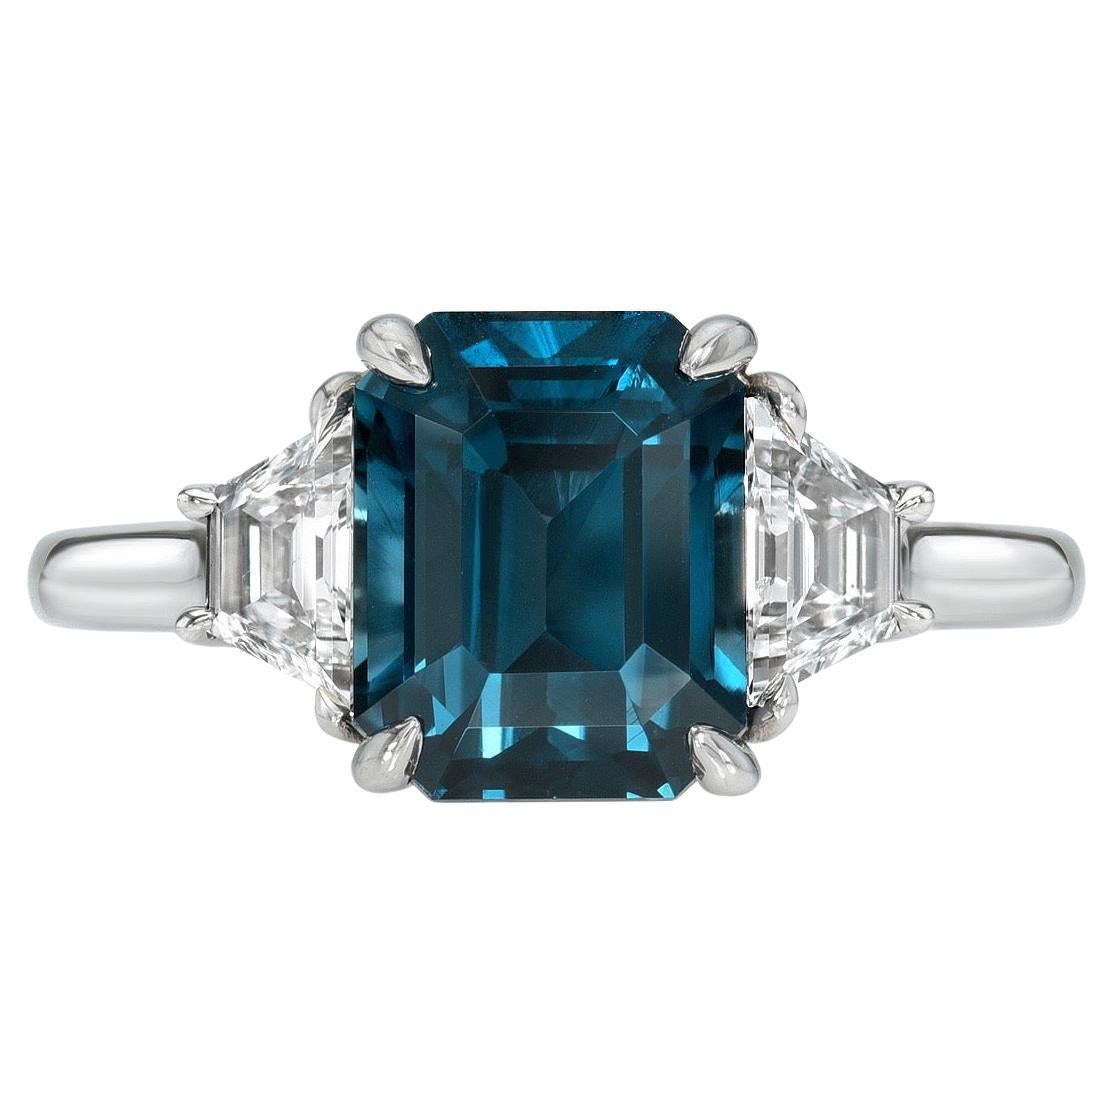 Teal Blue Sapphire Ring 4.16 Carat Emerald Cut Sri Lanka For Sale